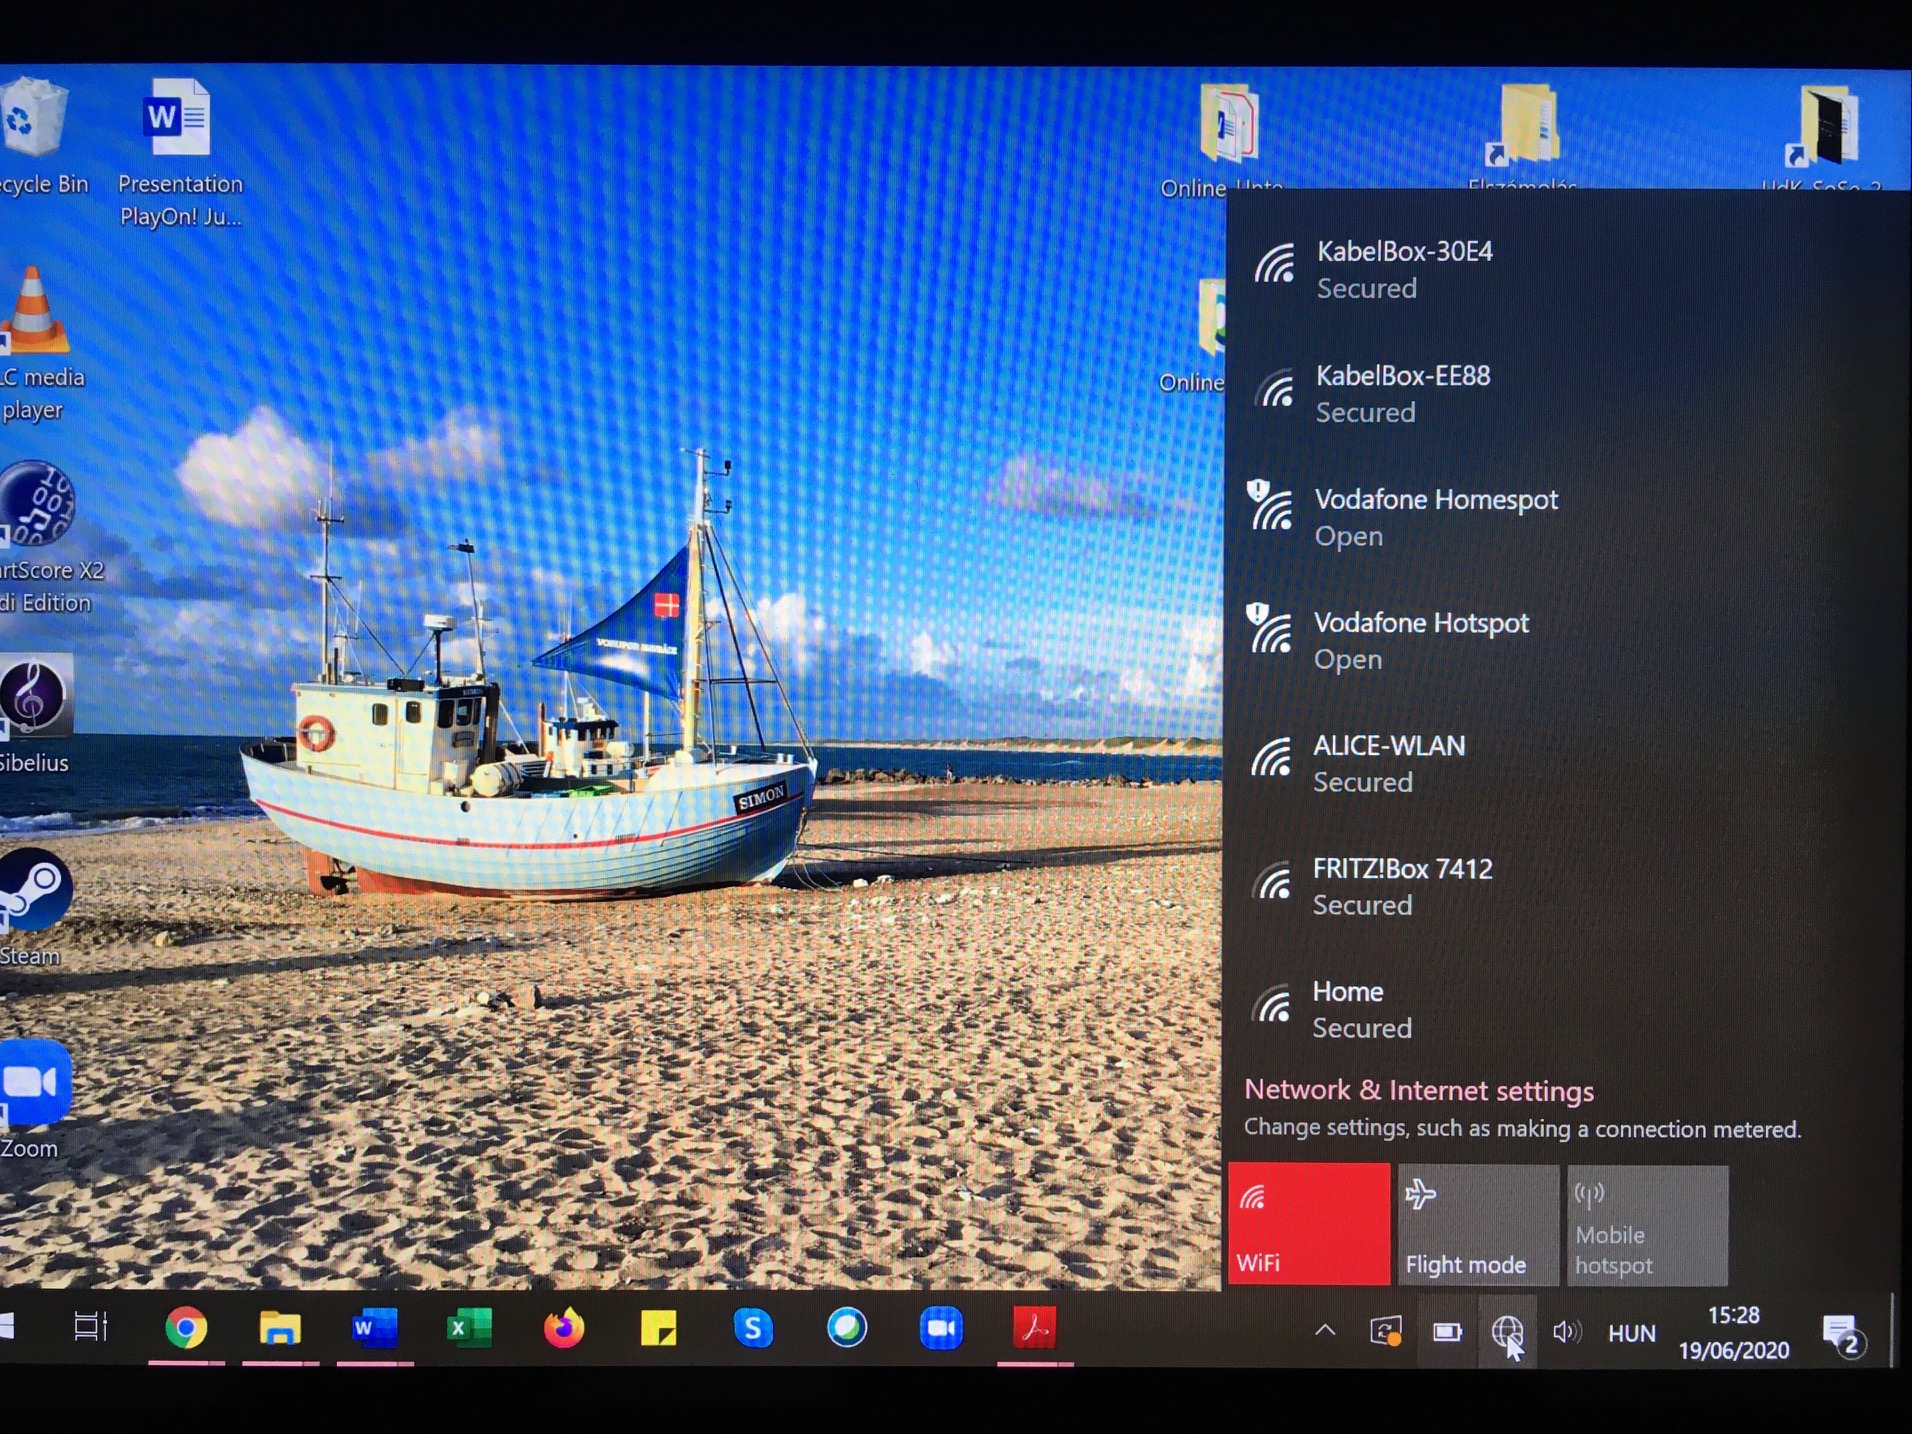 windows media player problem in 4k display - Microsoft Community